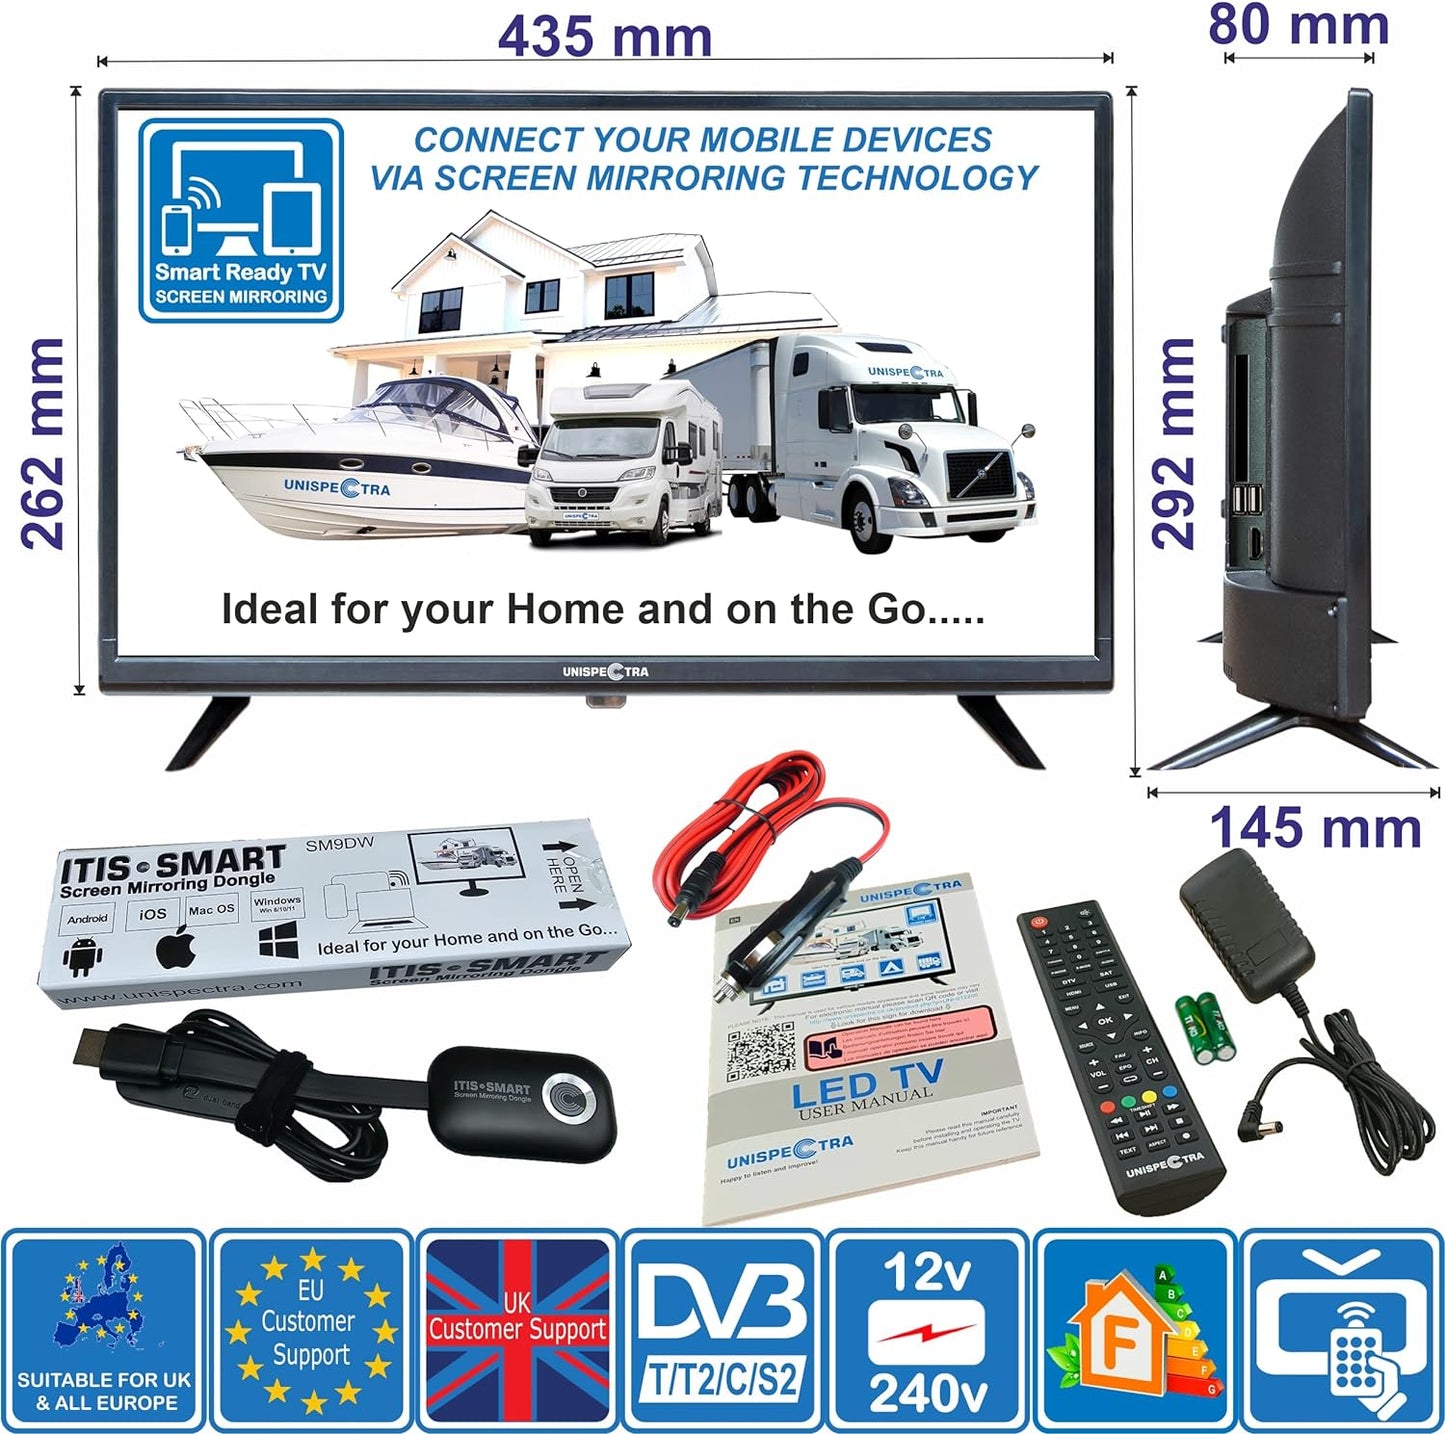 19" Unispectra® Smart Ready TV